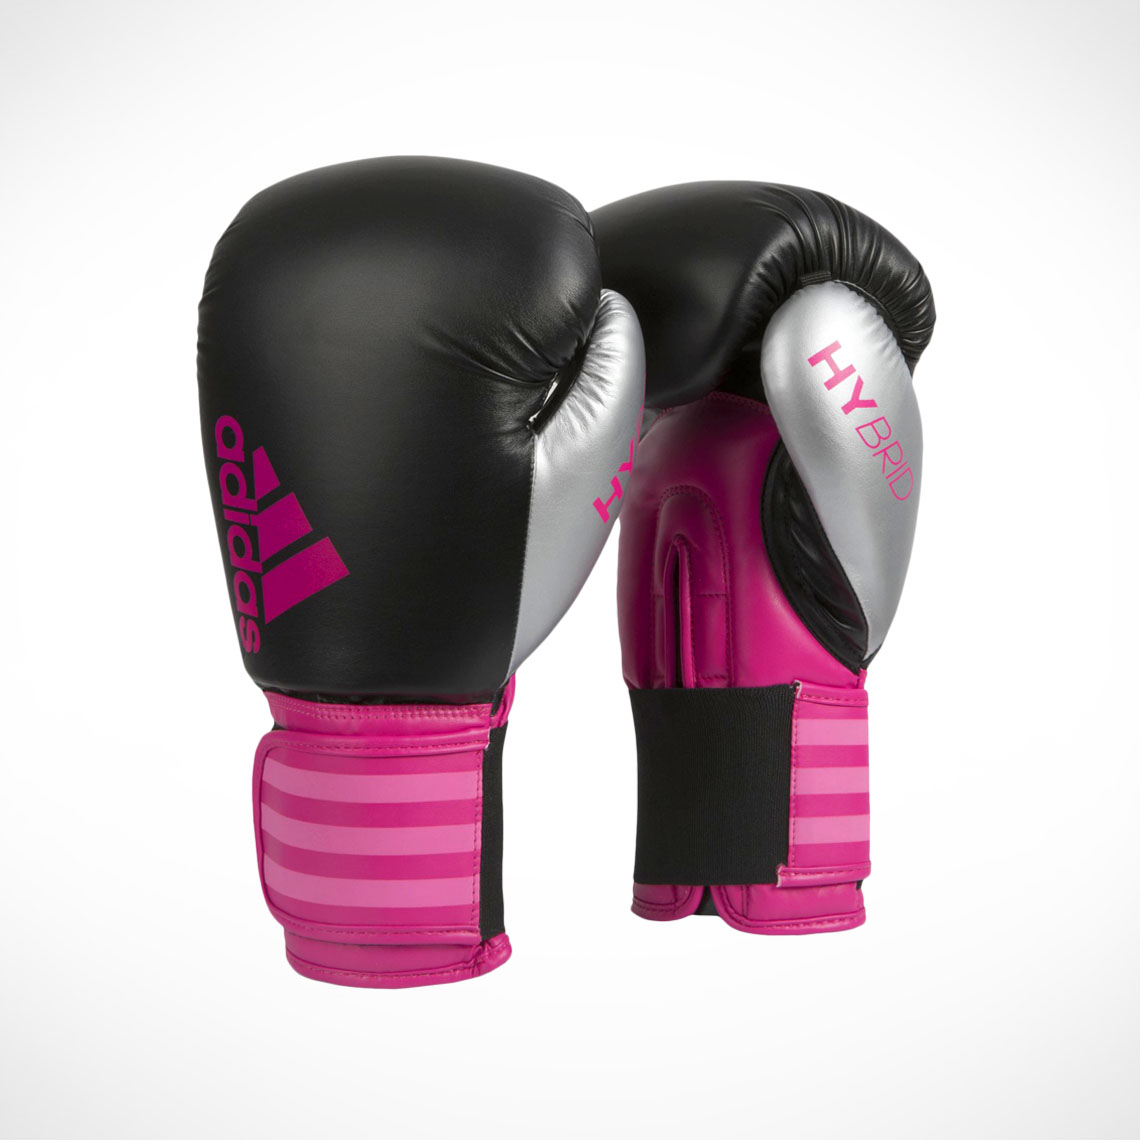 Hybrid 80 Boxing Glove перчатки.